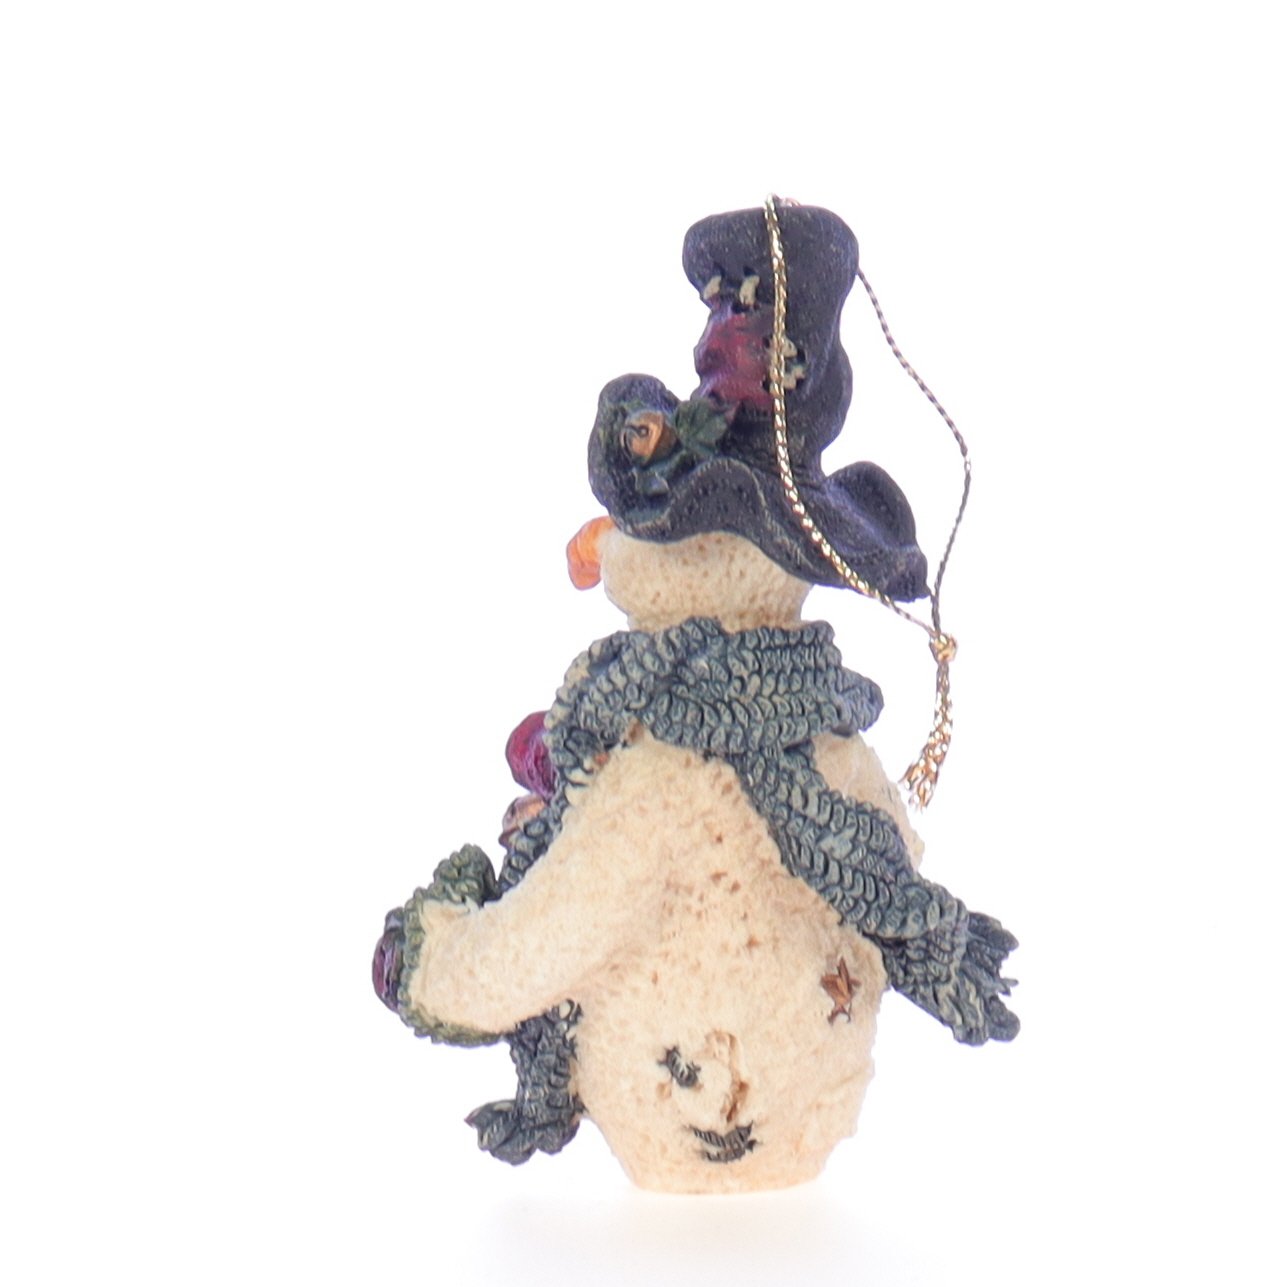 Boyds_Bears_Folkstone_Resin_Figurine_Ornament_Jingles_the_Snowman_with_Wreath_2562_04